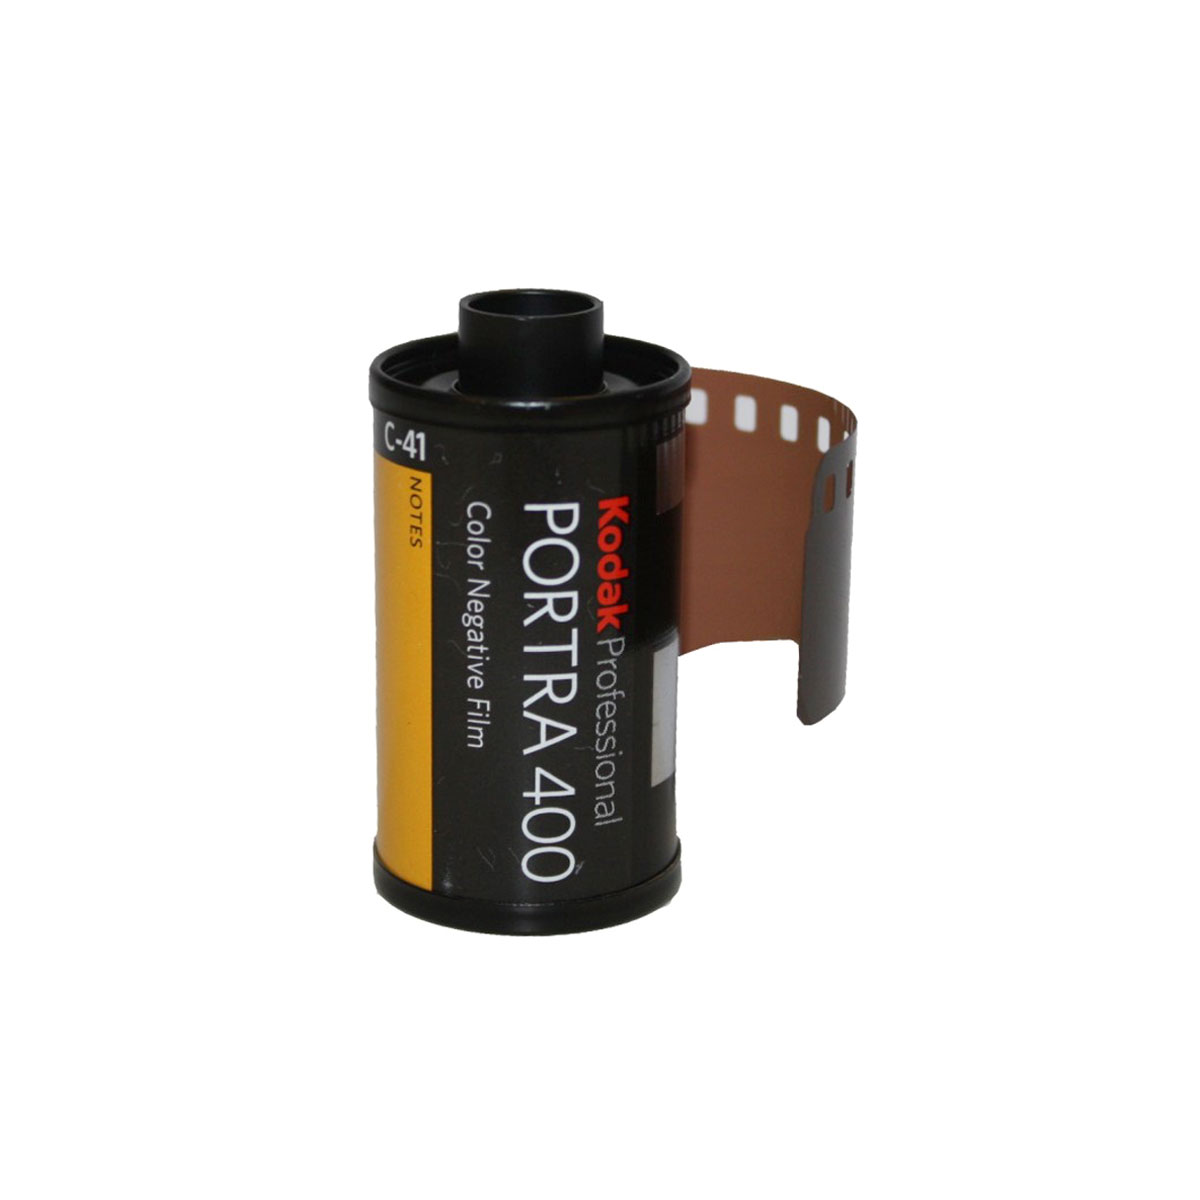 35mm Roll Film, 1 Roll Kodak Professional Portra 400 Color Negative Film 